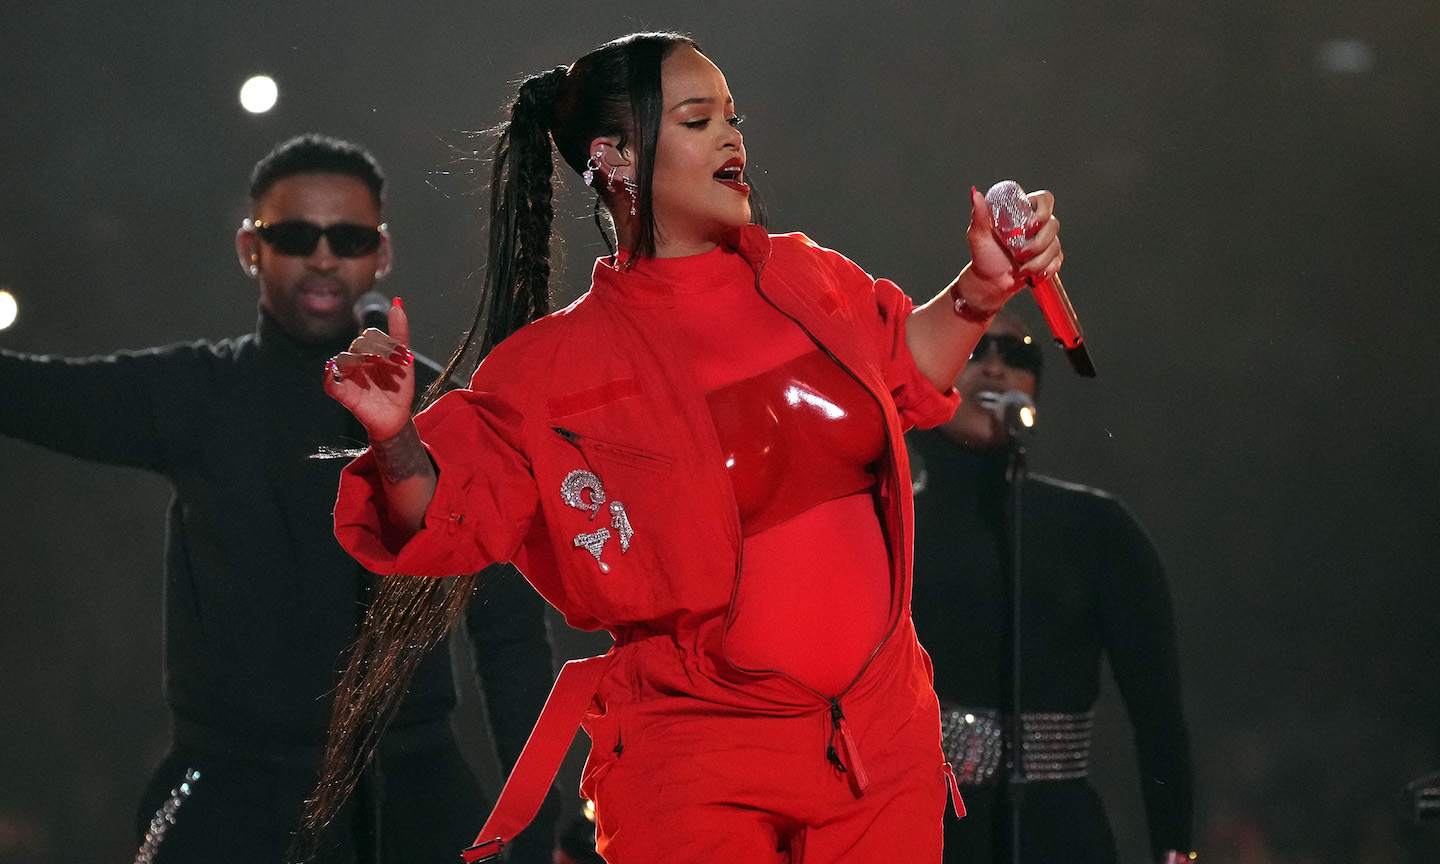 Rihanna's Best Songs, Ranked